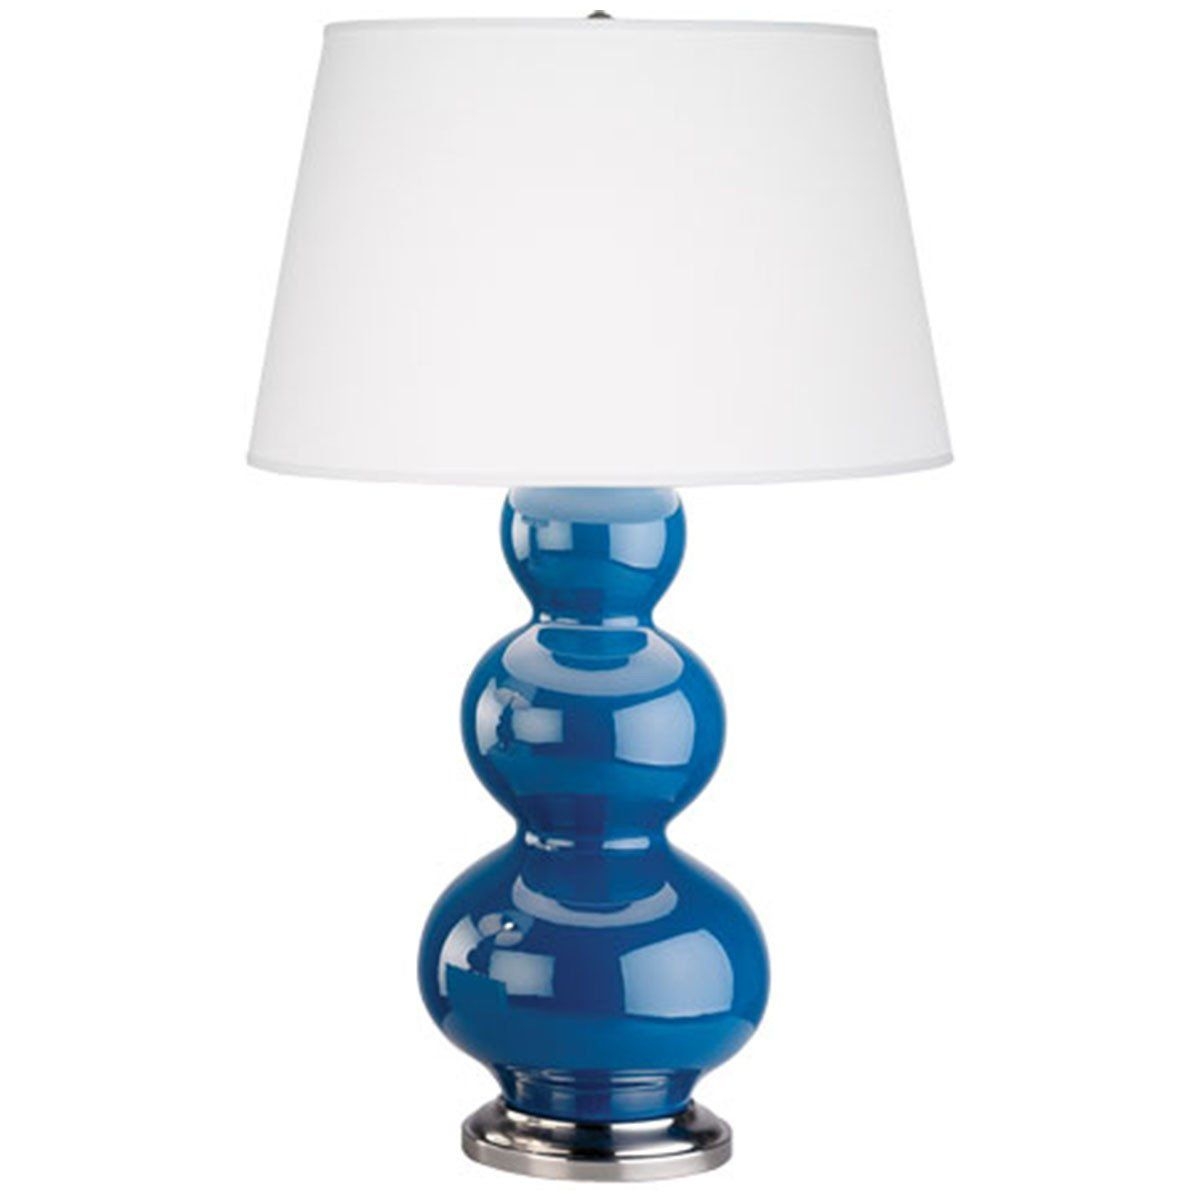 Blue glaze ceramic table lamp 22